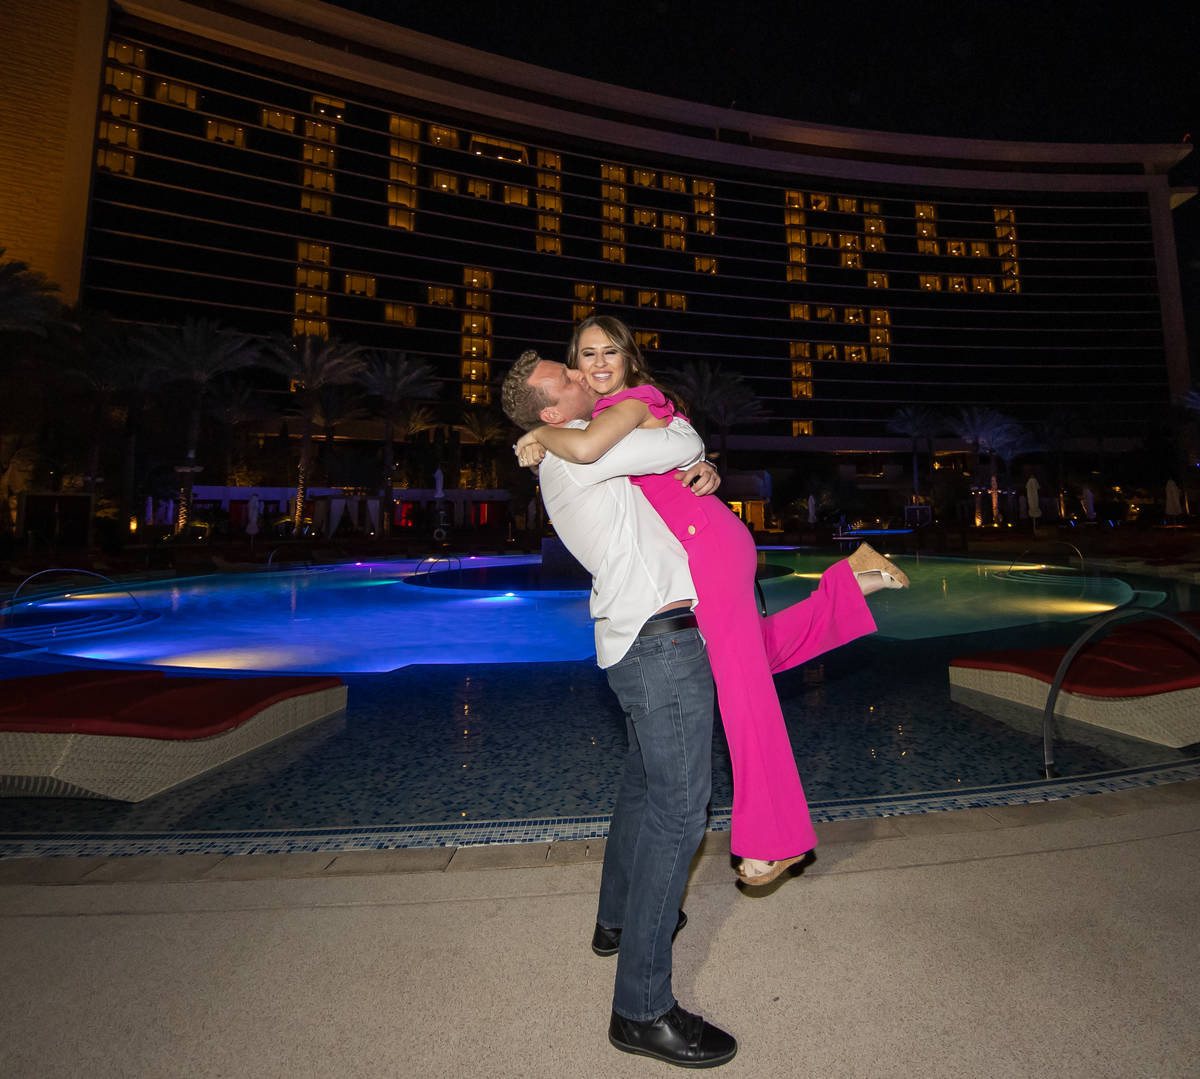 Las Vegass Red Rock Resort backdrop for marriage proposal Las Vegas Review-Journal pic